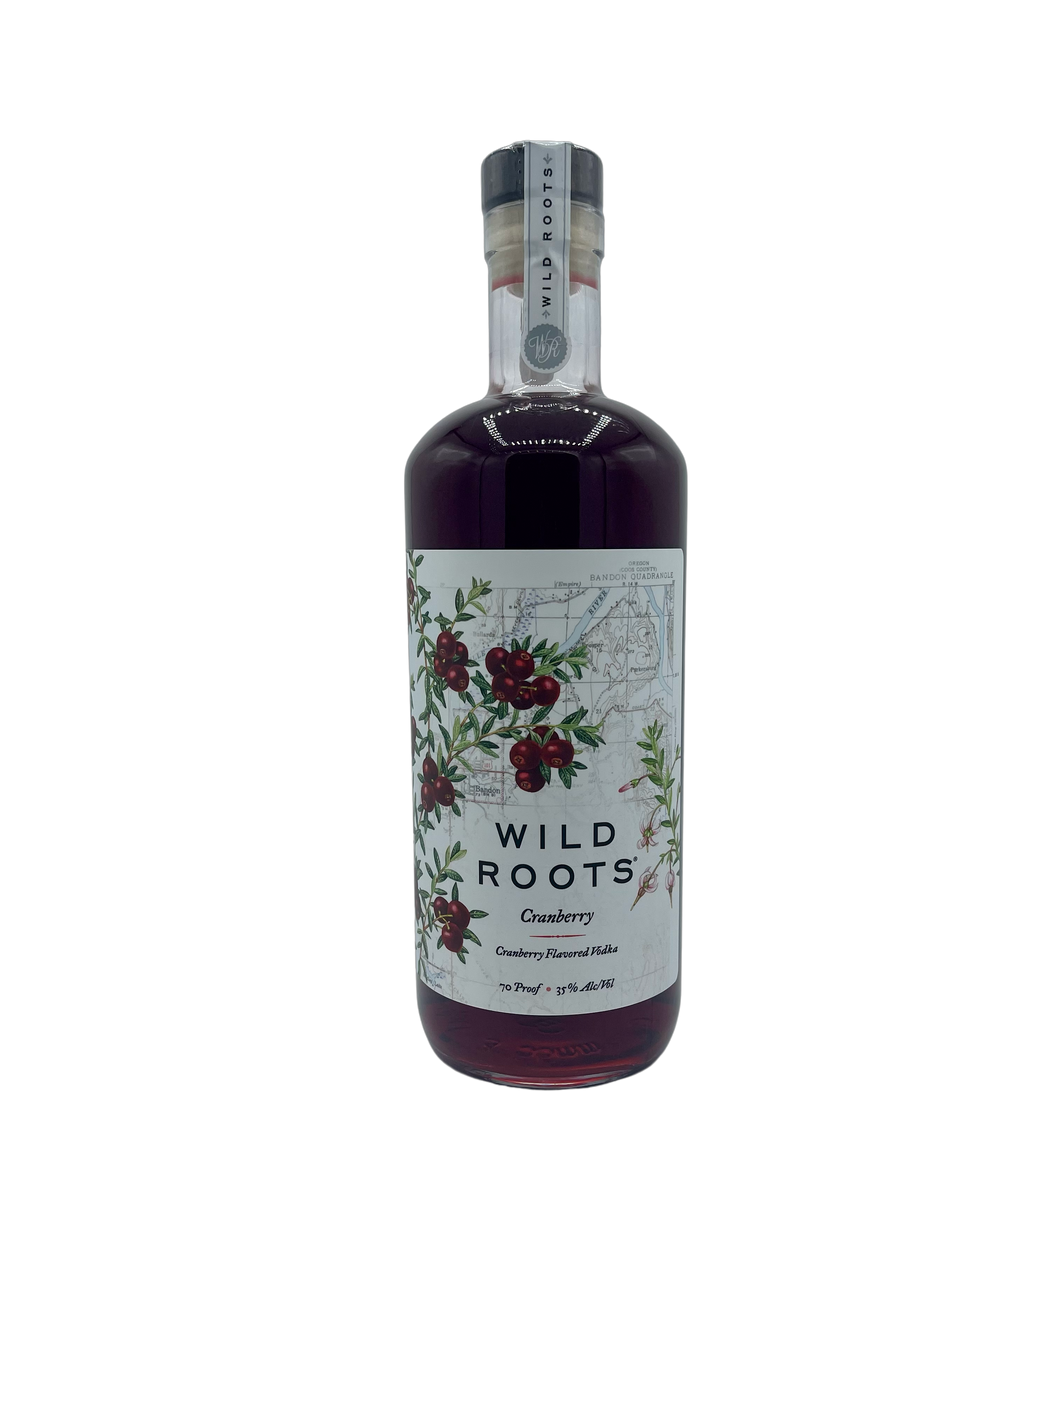 Wild Roots Cranberry Vodka 750mL